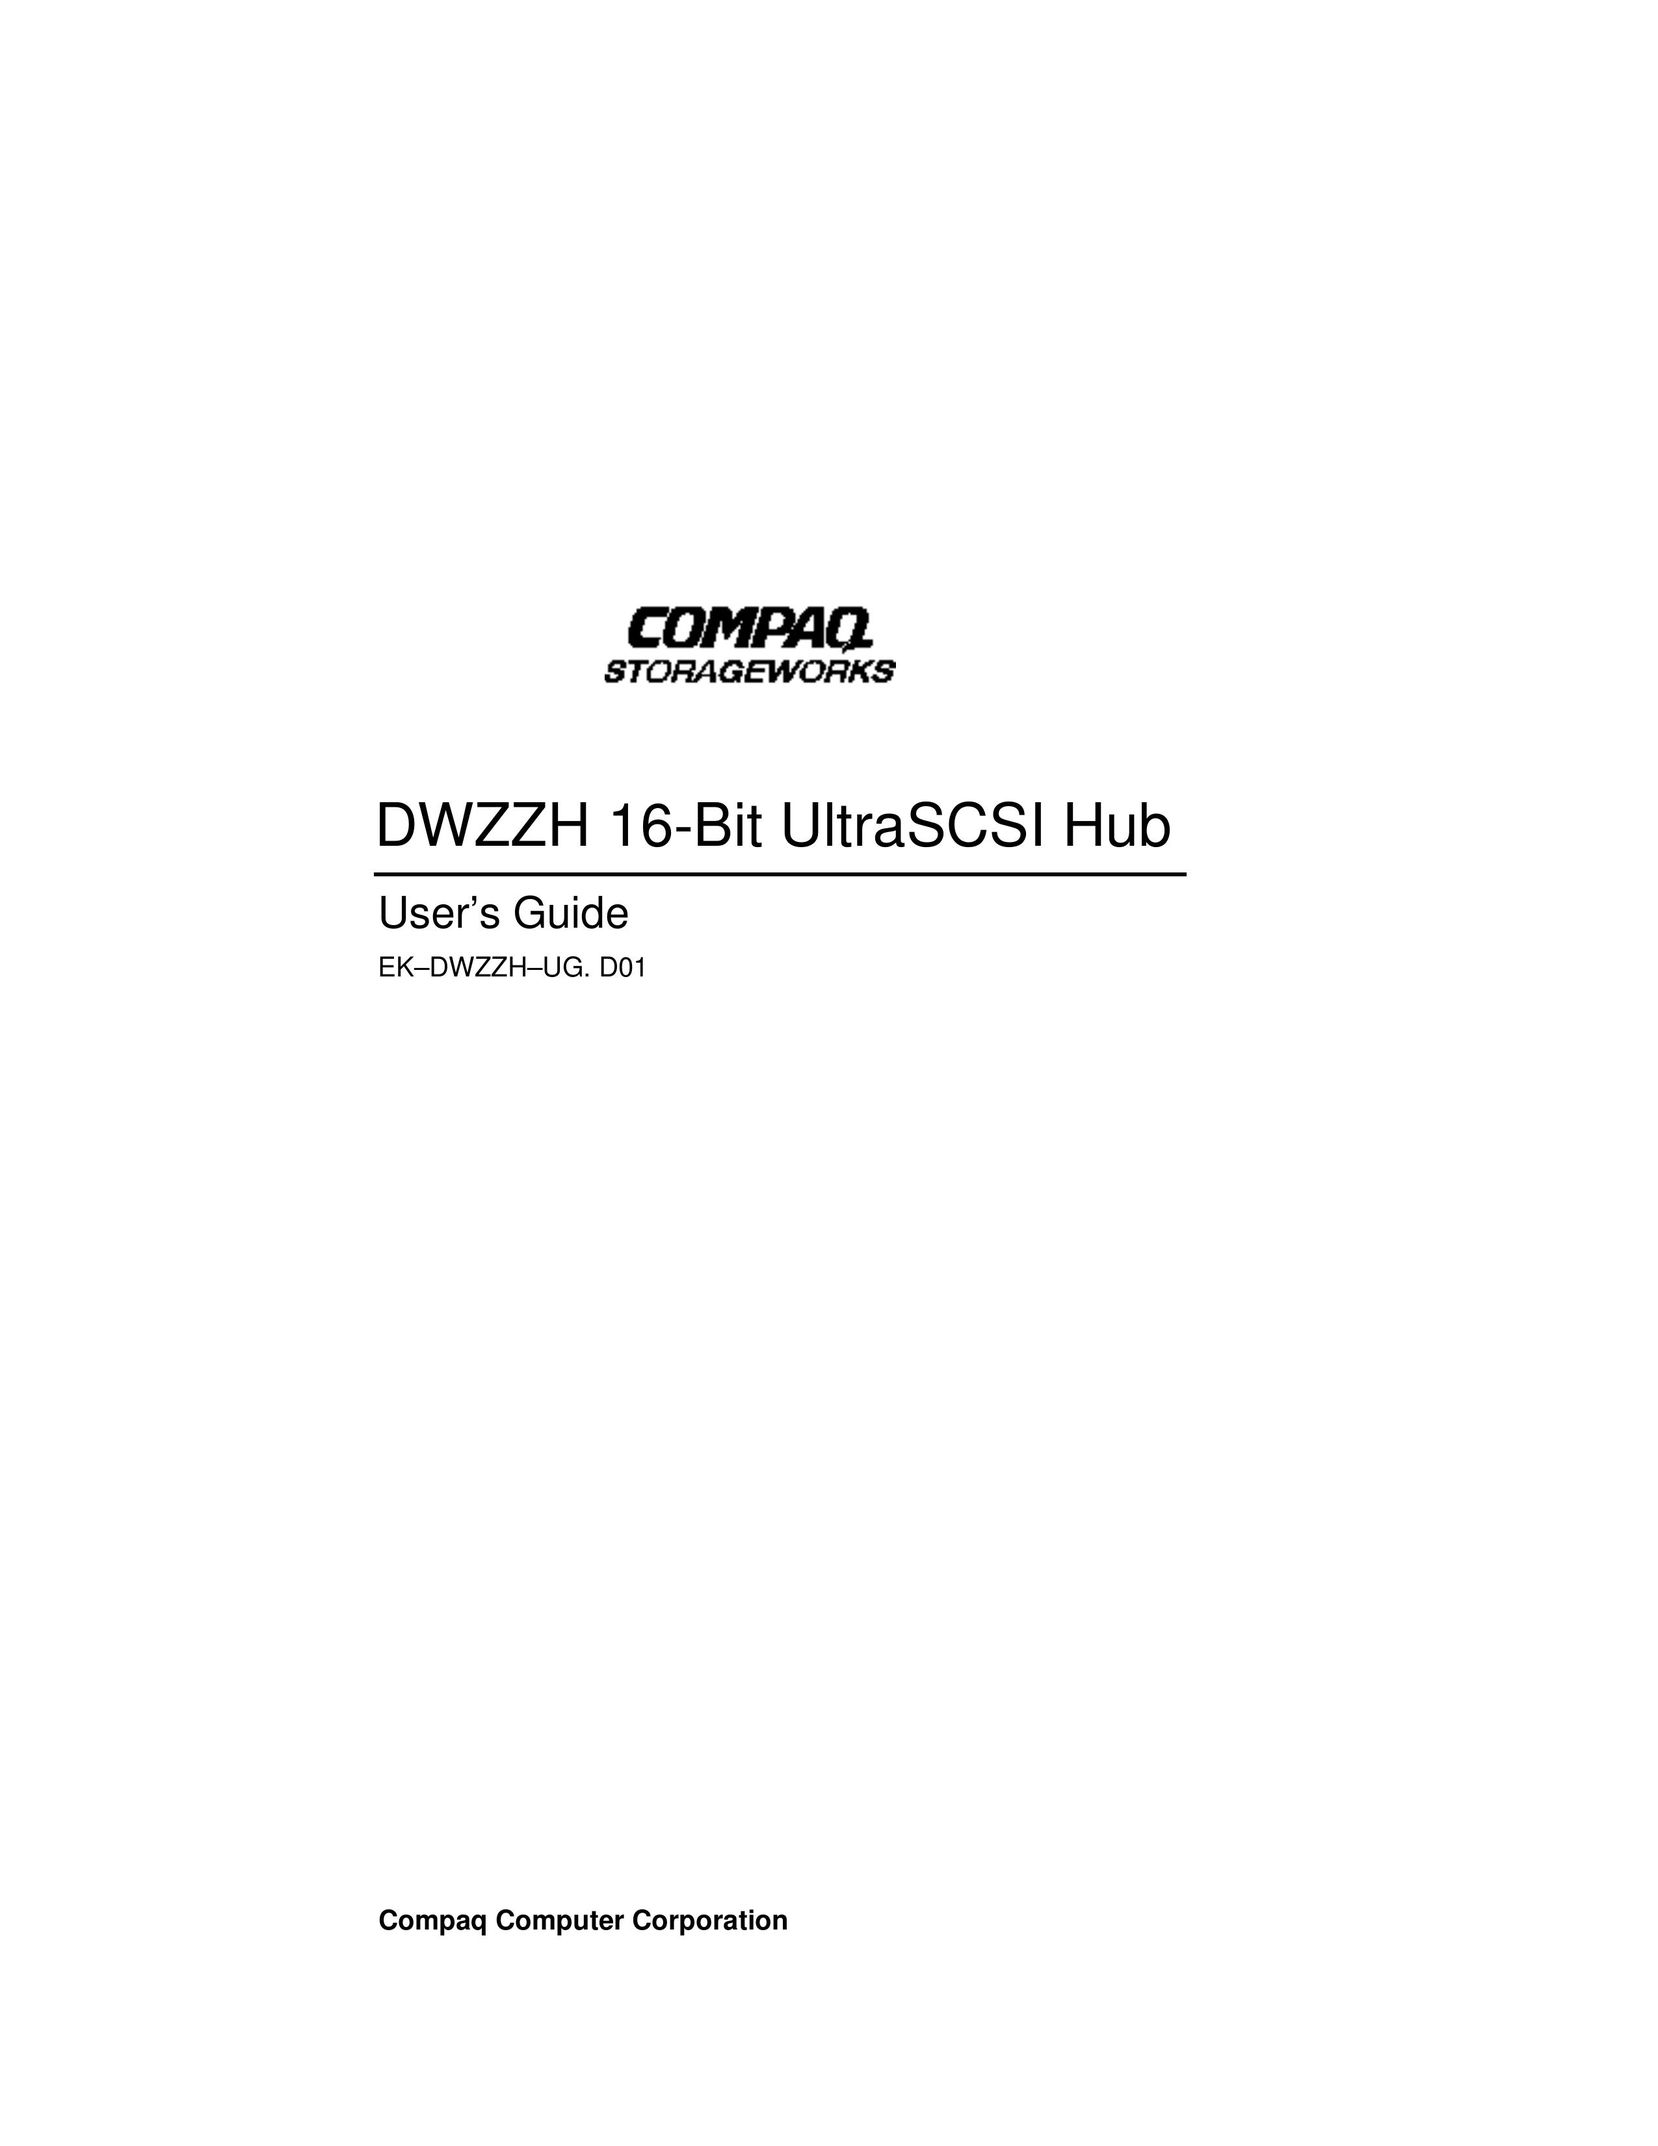 Compaq DWZZH Computer Accessories User Manual